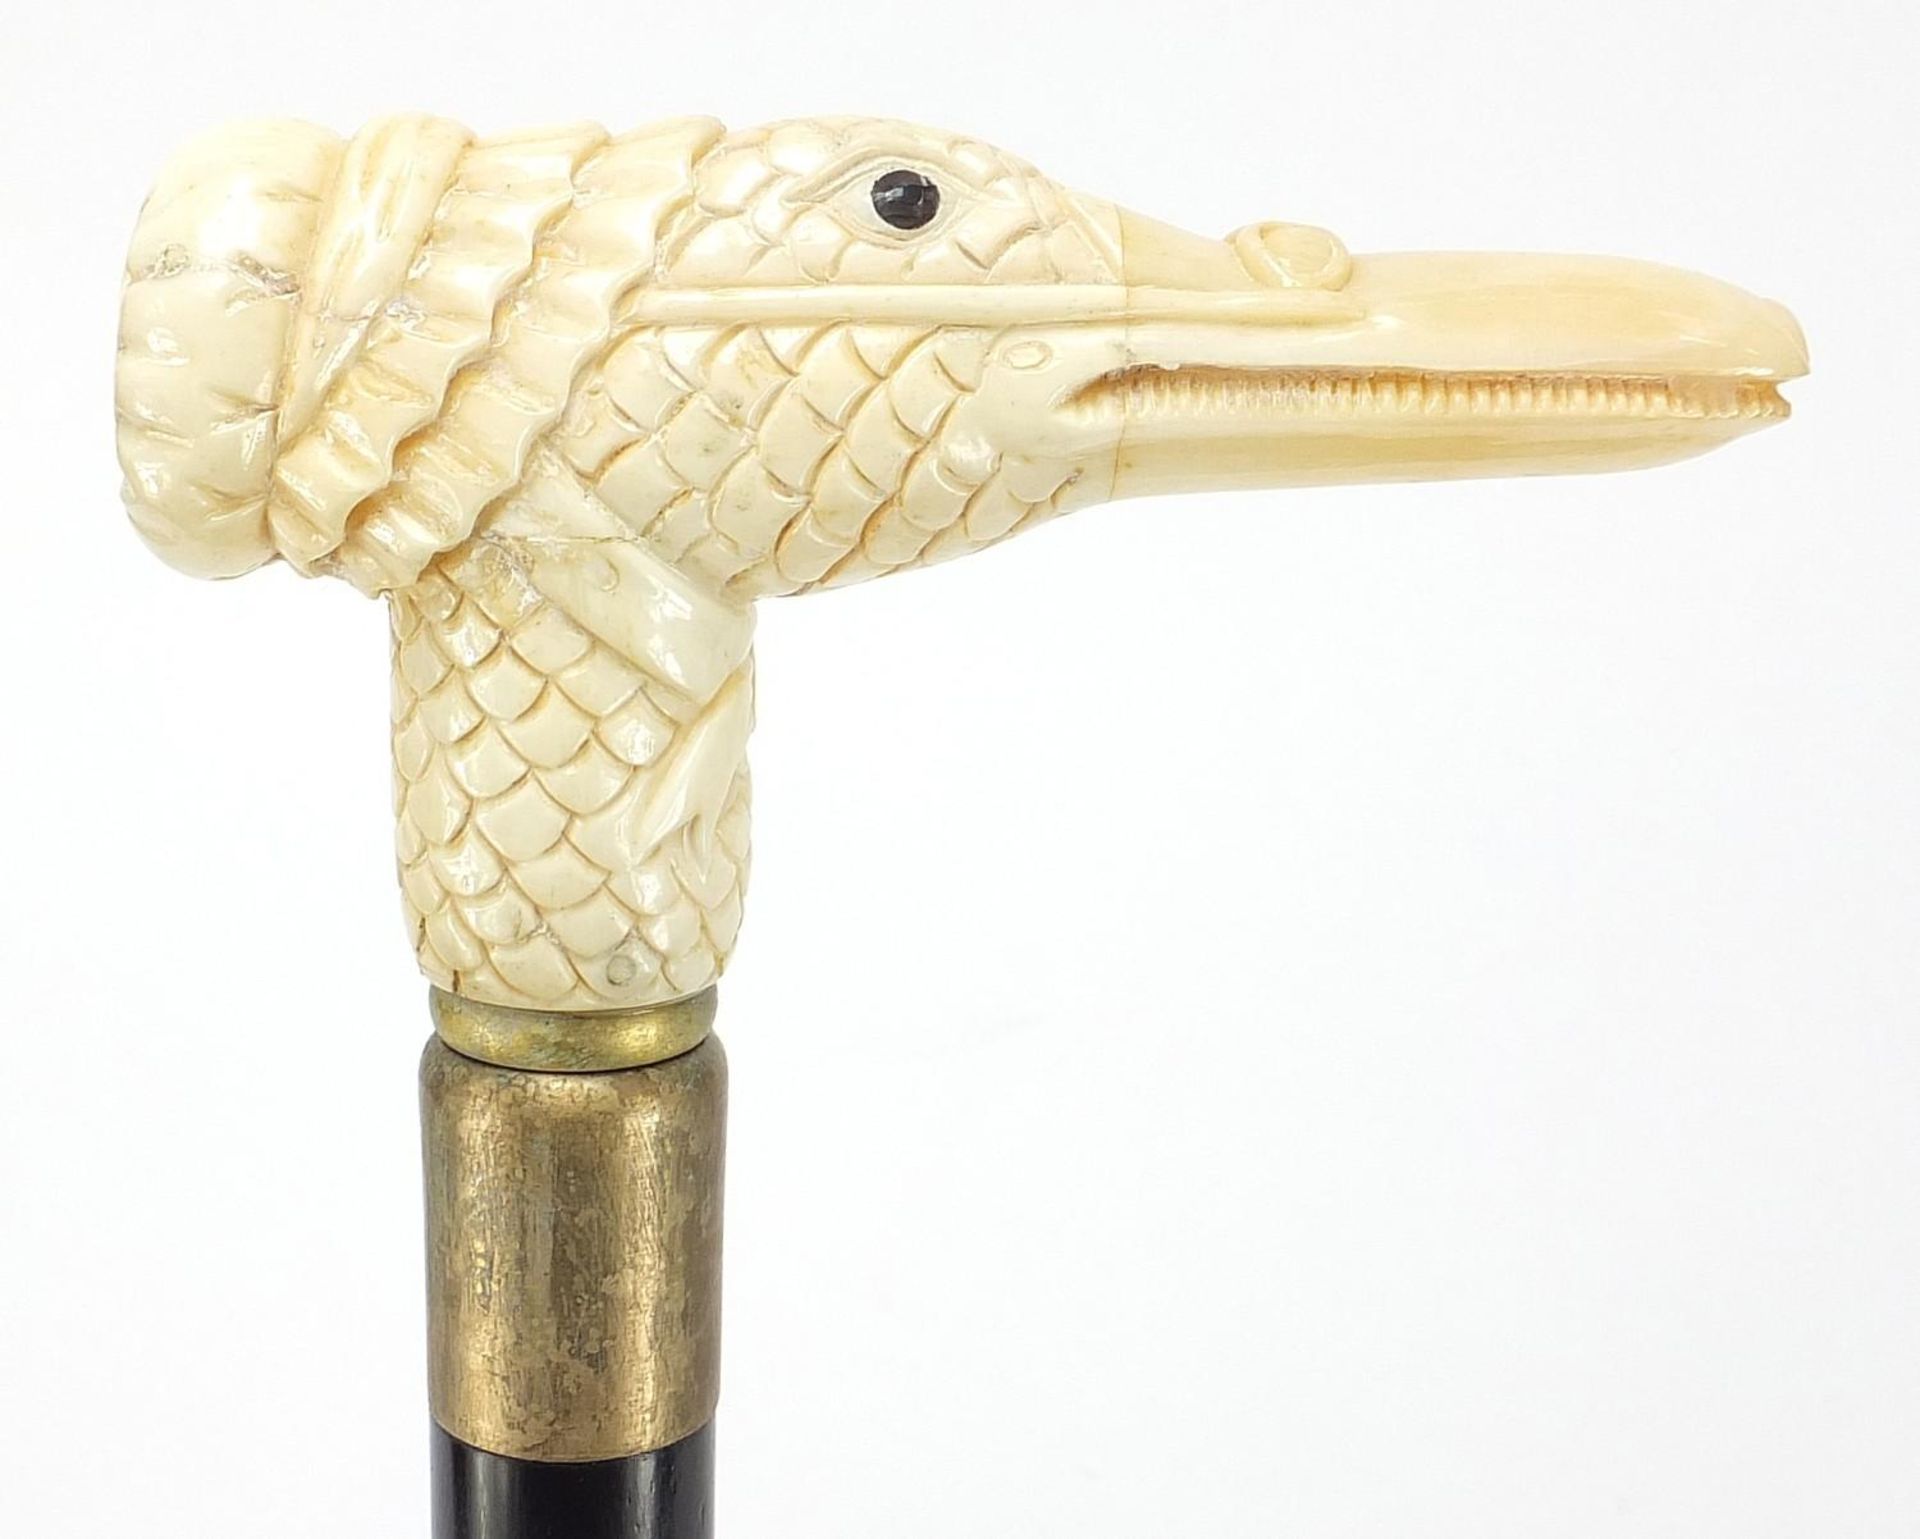 Hardwood walking stick with carved bone duck design handle, 91.5cm in length :